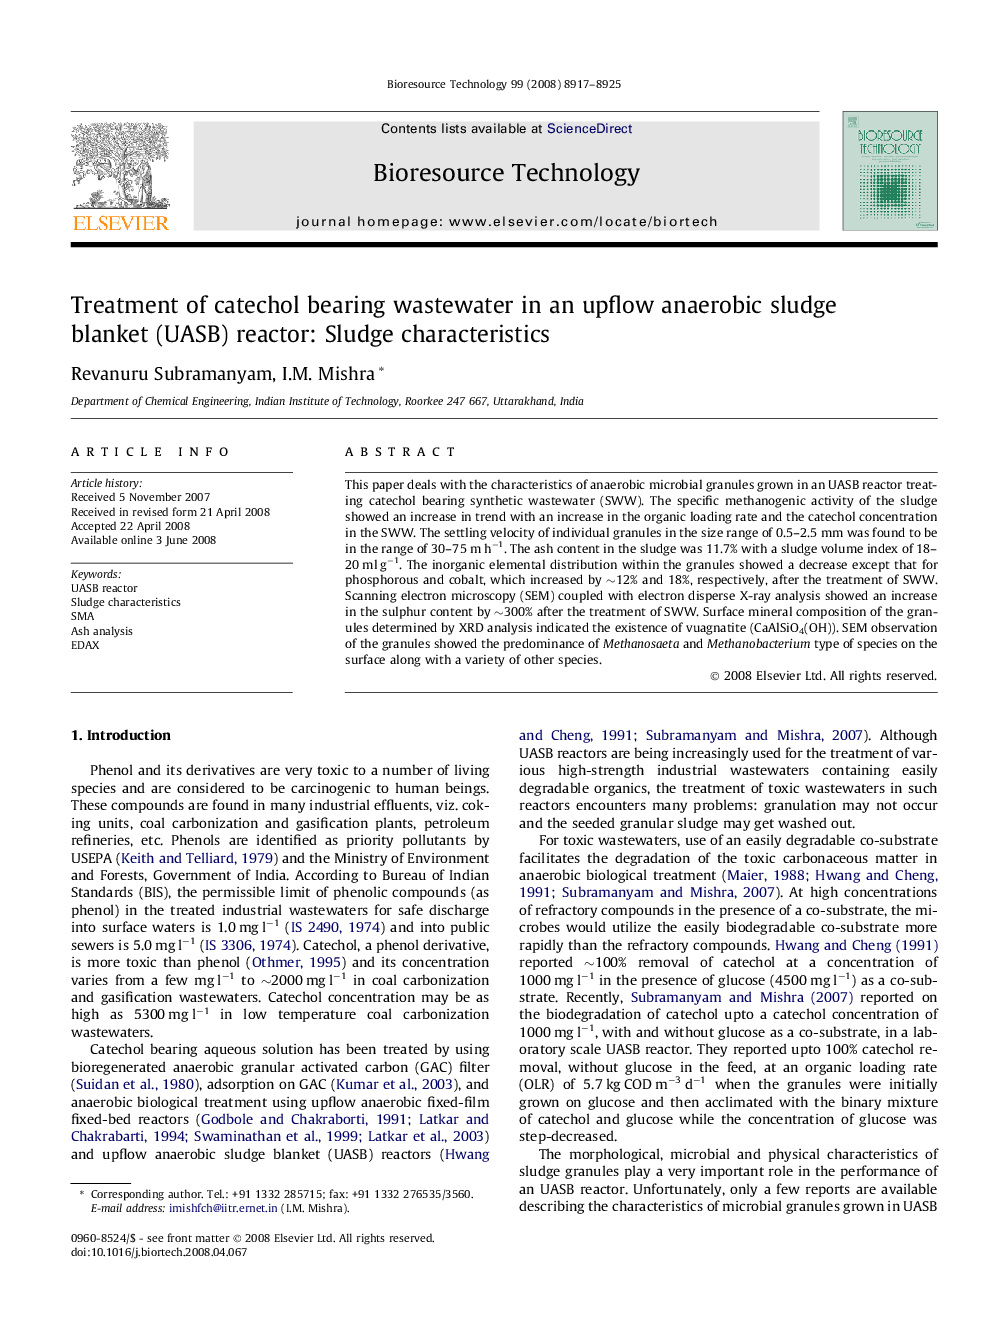 Treatment of catechol bearing wastewater in an upflow anaerobic sludge blanket (UASB) reactor: Sludge characteristics